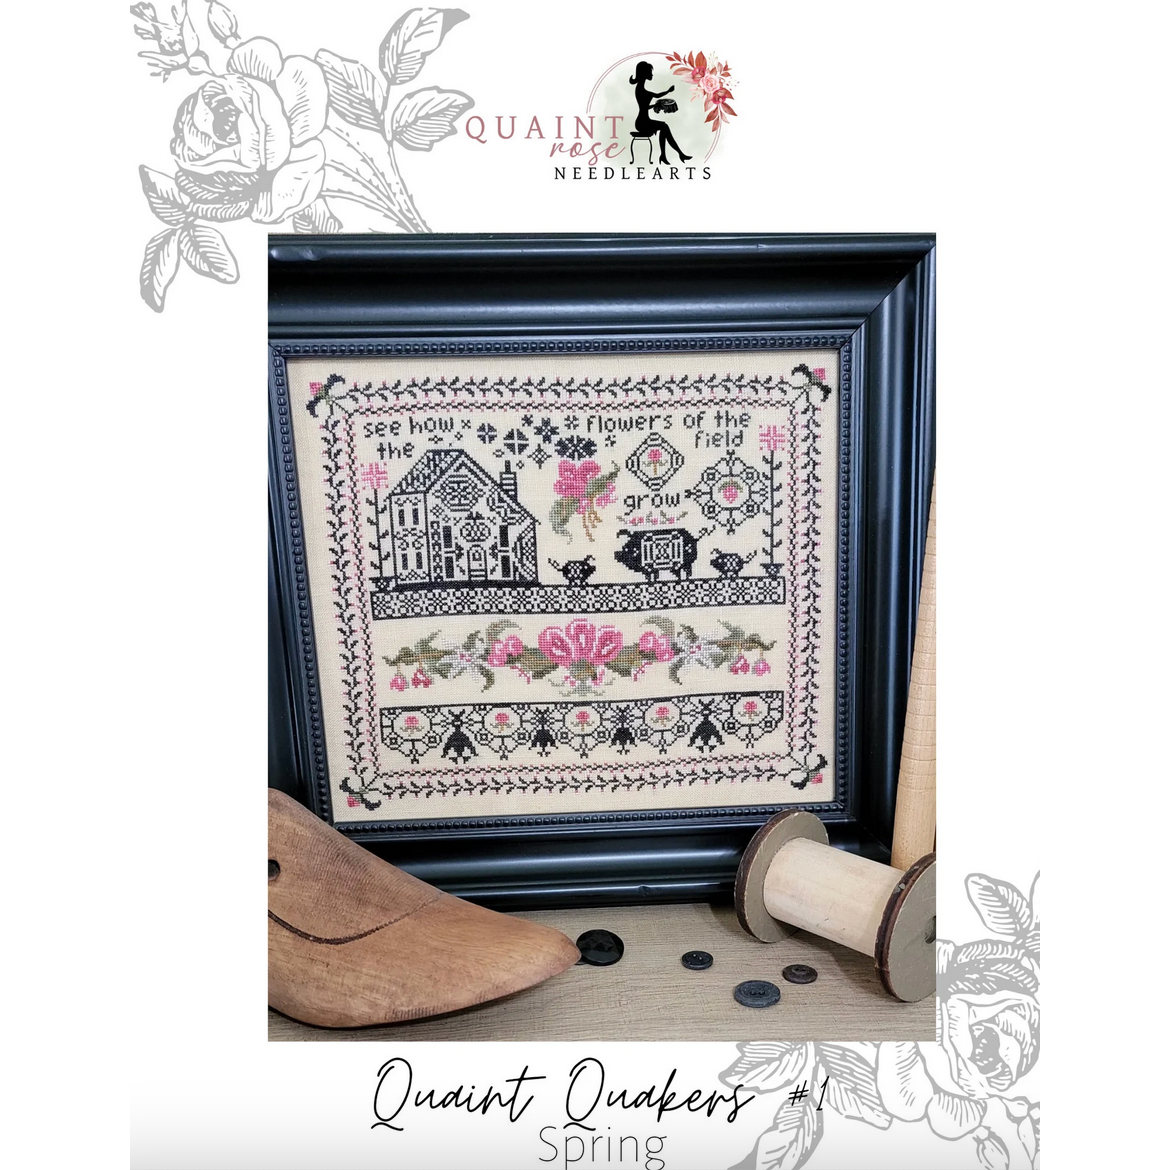 Quaint Rose Needleart ~ Quaint Quakers #1 Spring Pattern